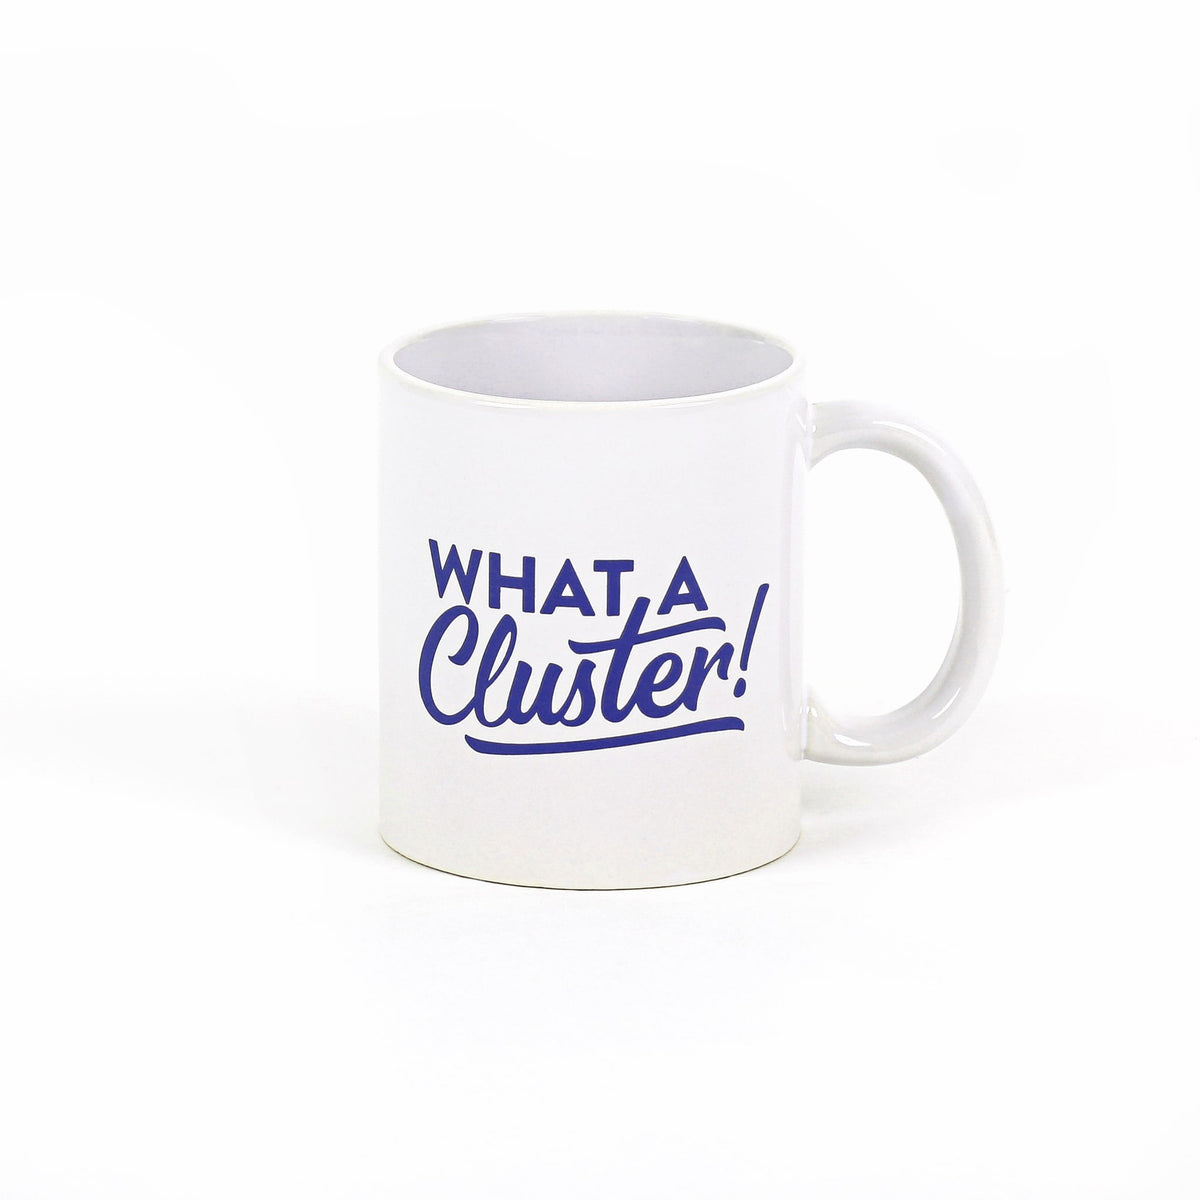 What A Cluster! Mug